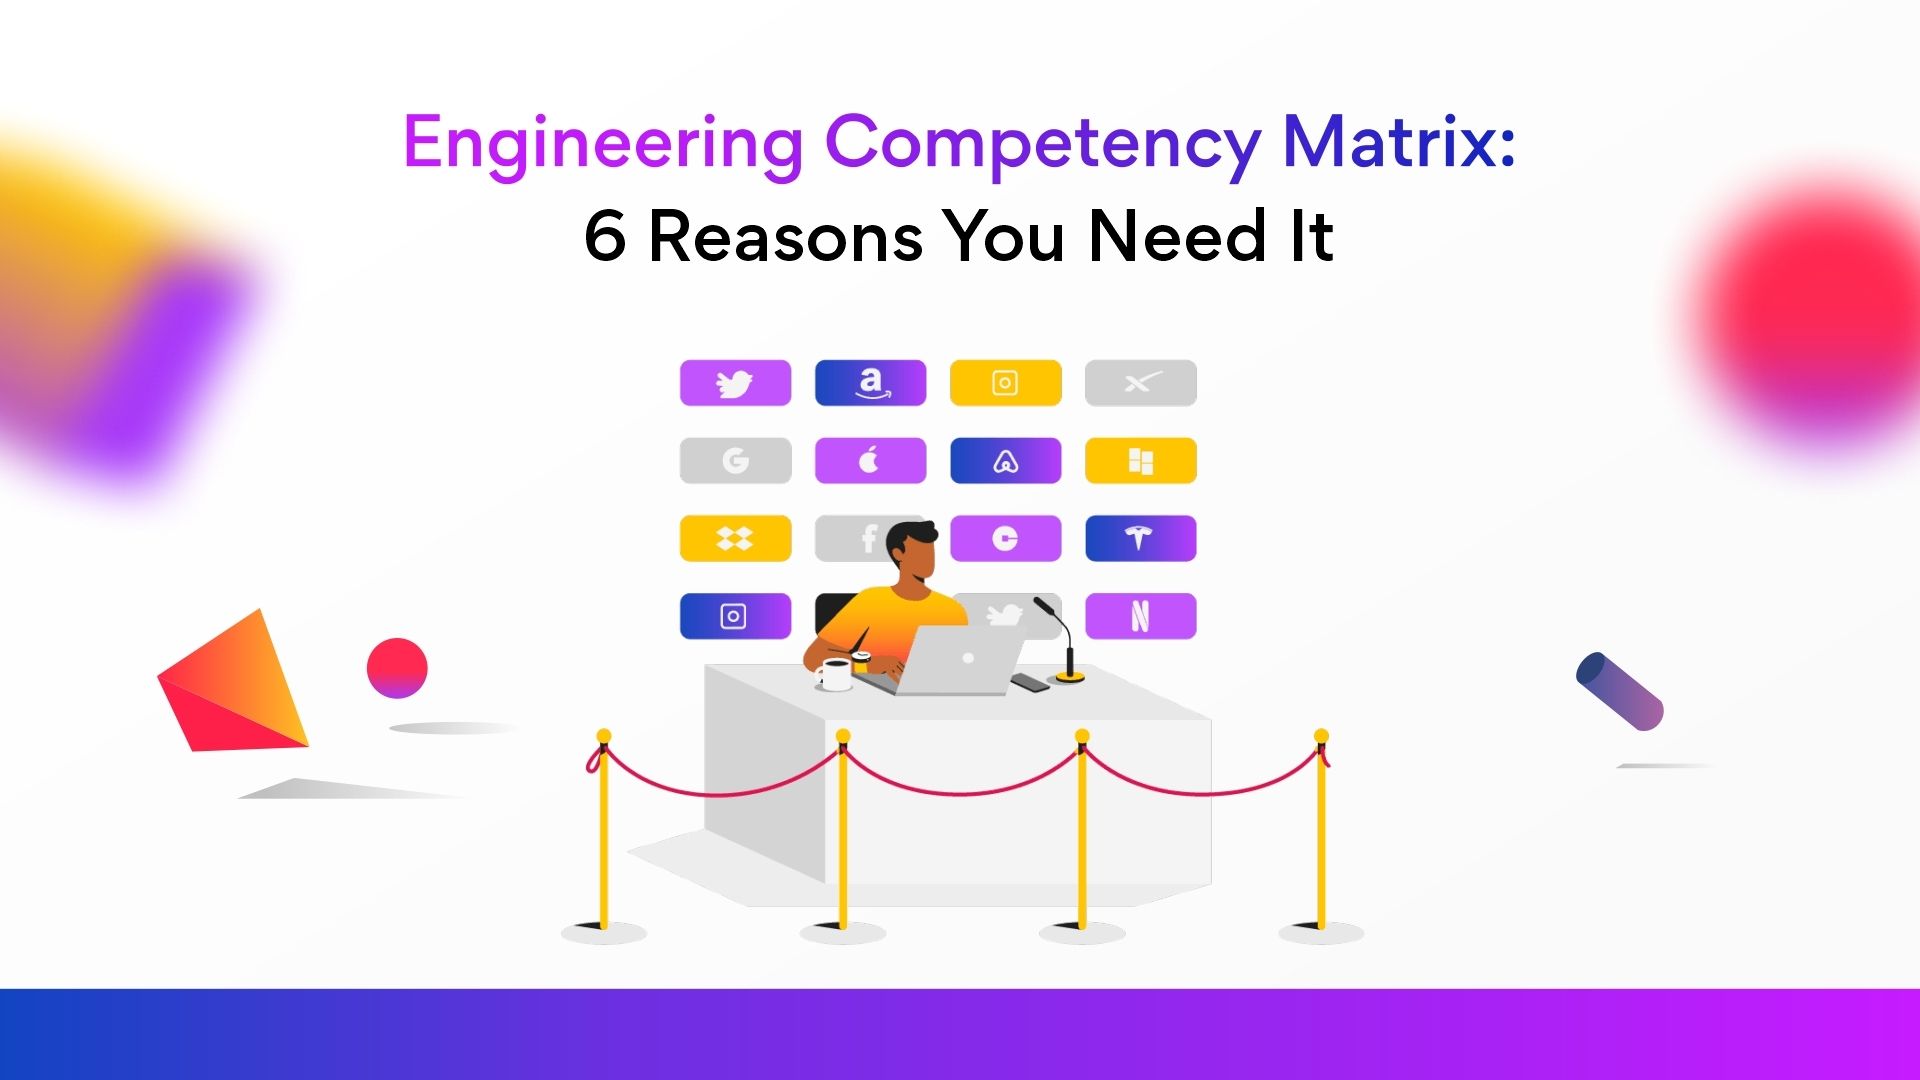 Engineering competency matrix